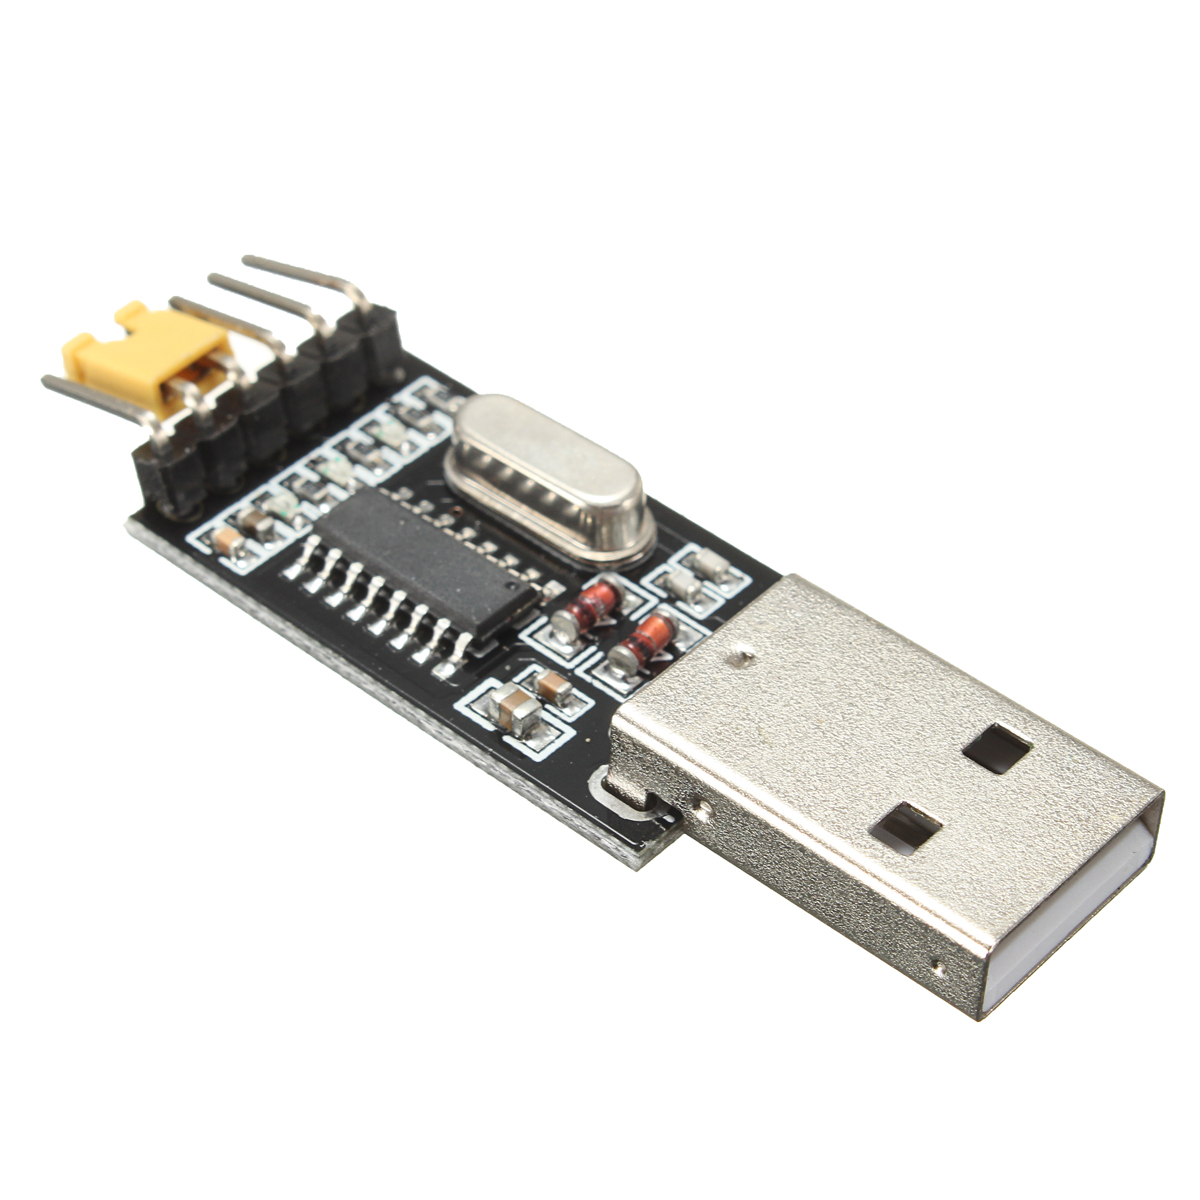 33V-5V-USB-to-TTL-Converter-CH340G-UART-Serial-Adapter-Module-STC-1232728-3